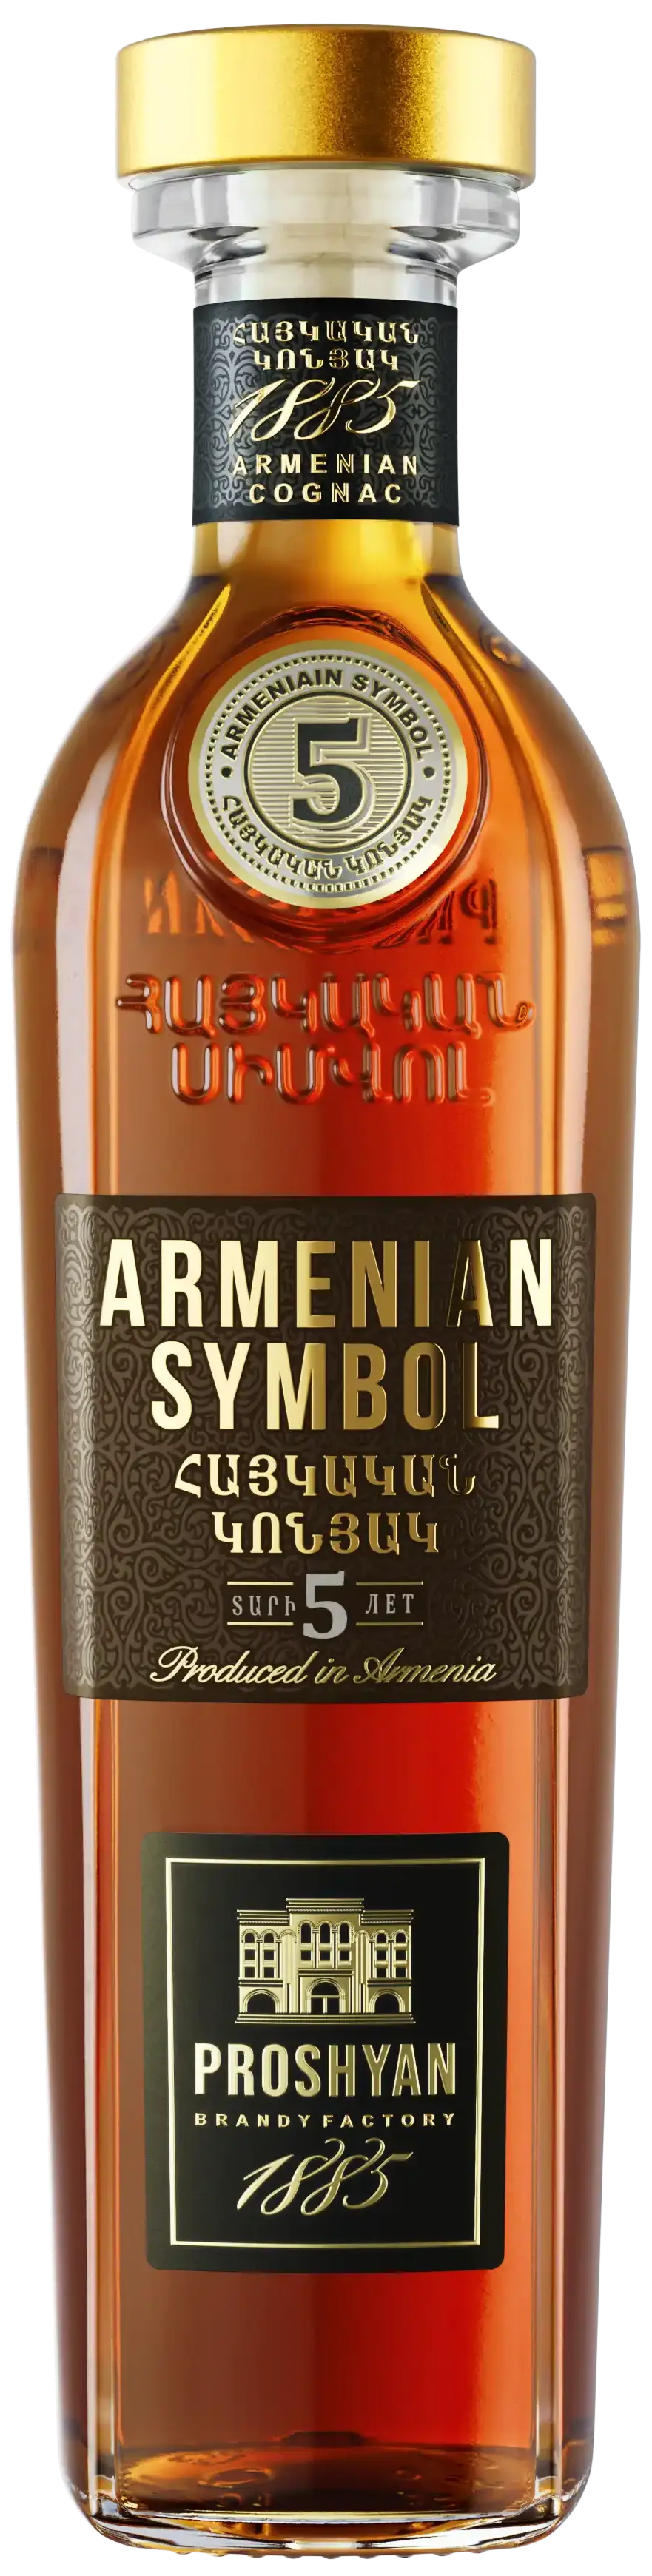 Армянский Символ  5 лет (Armenian Symbol 5 Years Old)